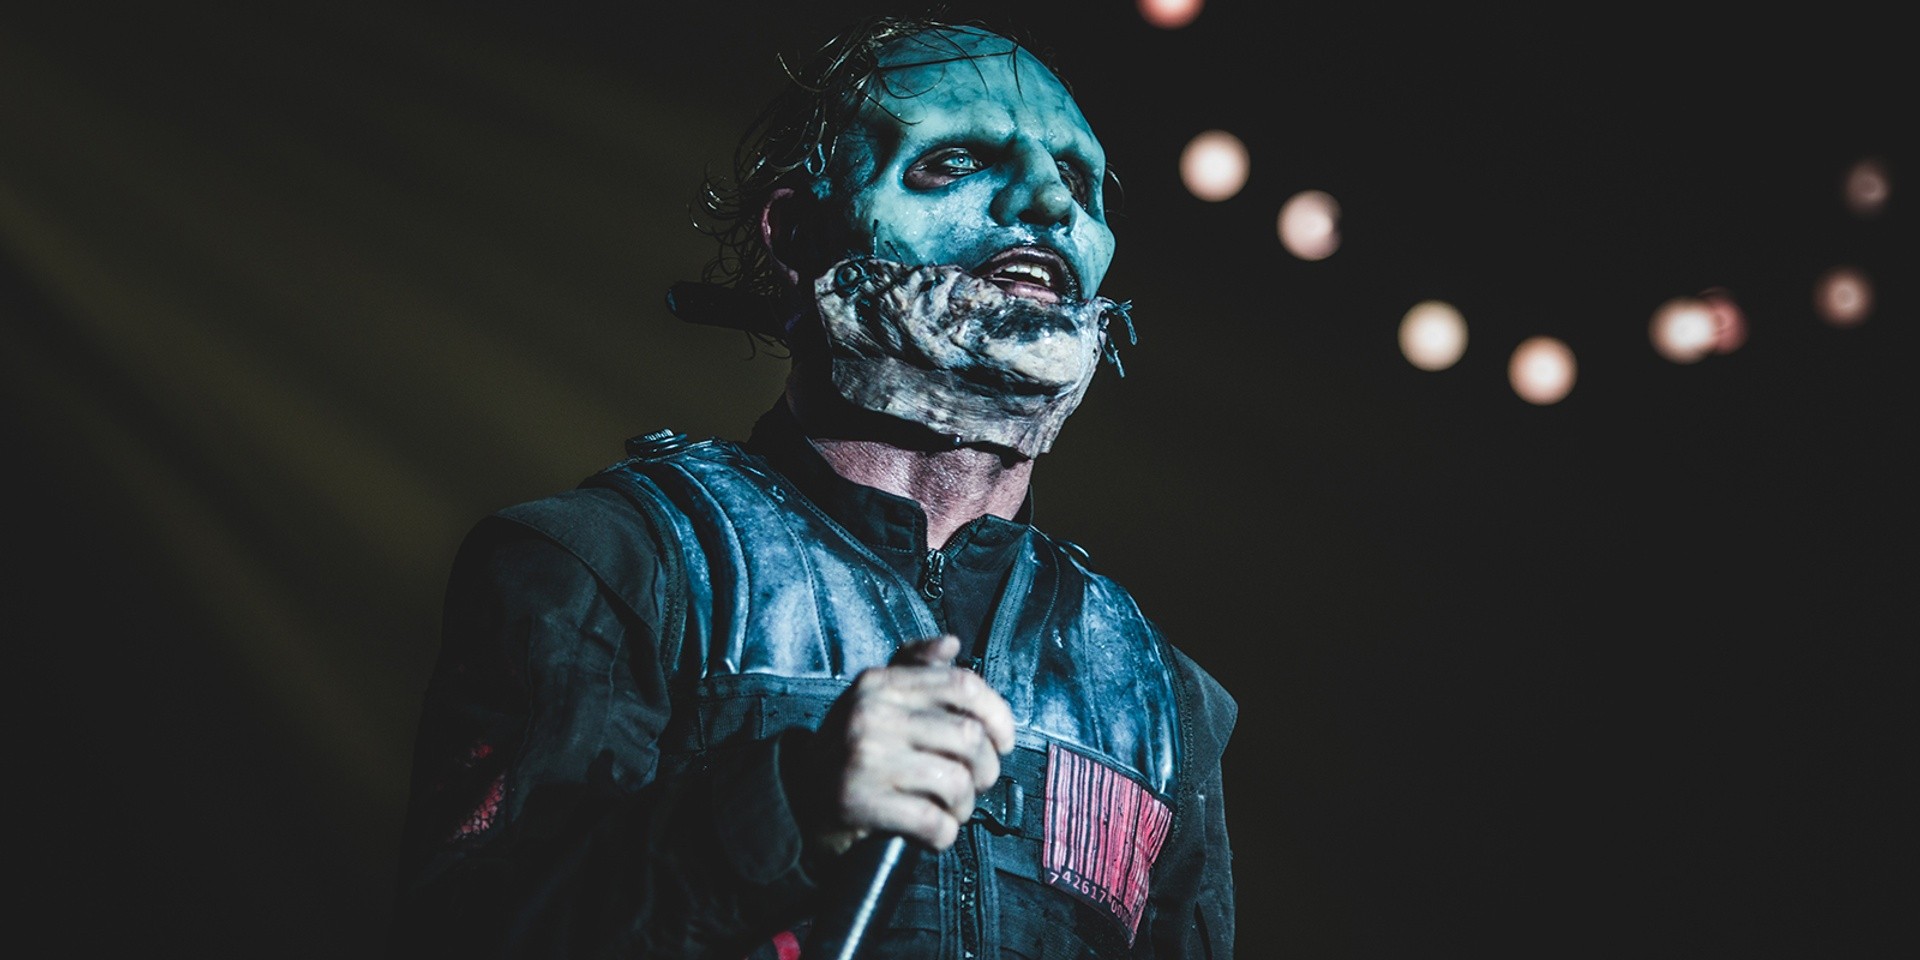 Slipknot confirms album release date 